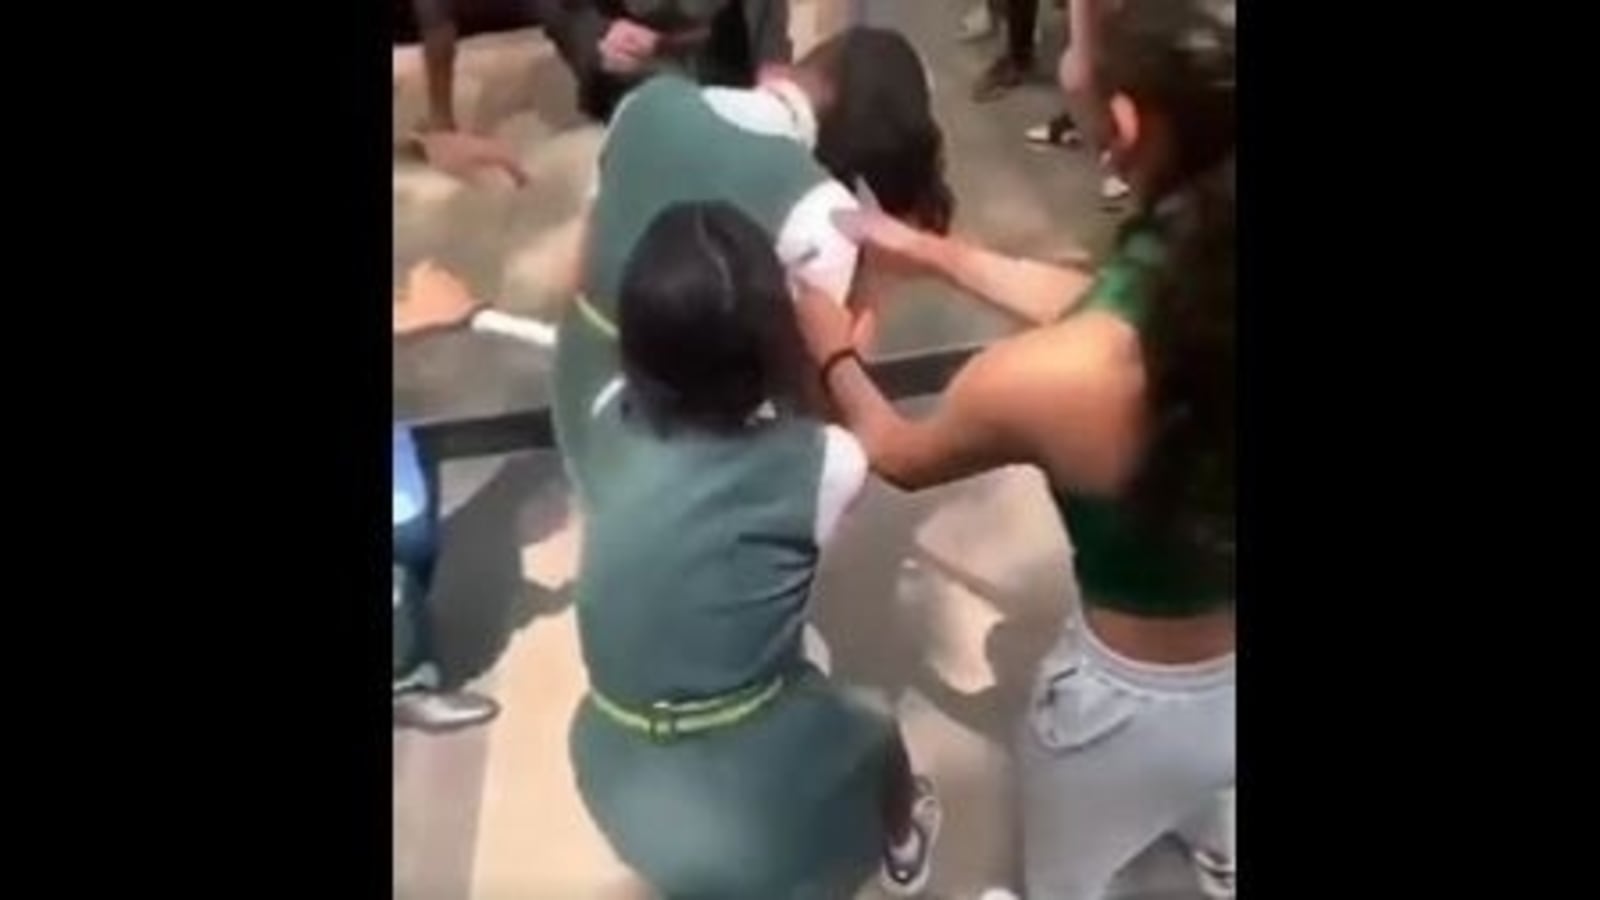 Cg Xxxii Videos - Video of Bengaluru girls fighting on street in school uniform emerges |  Latest News India - Hindustan Times